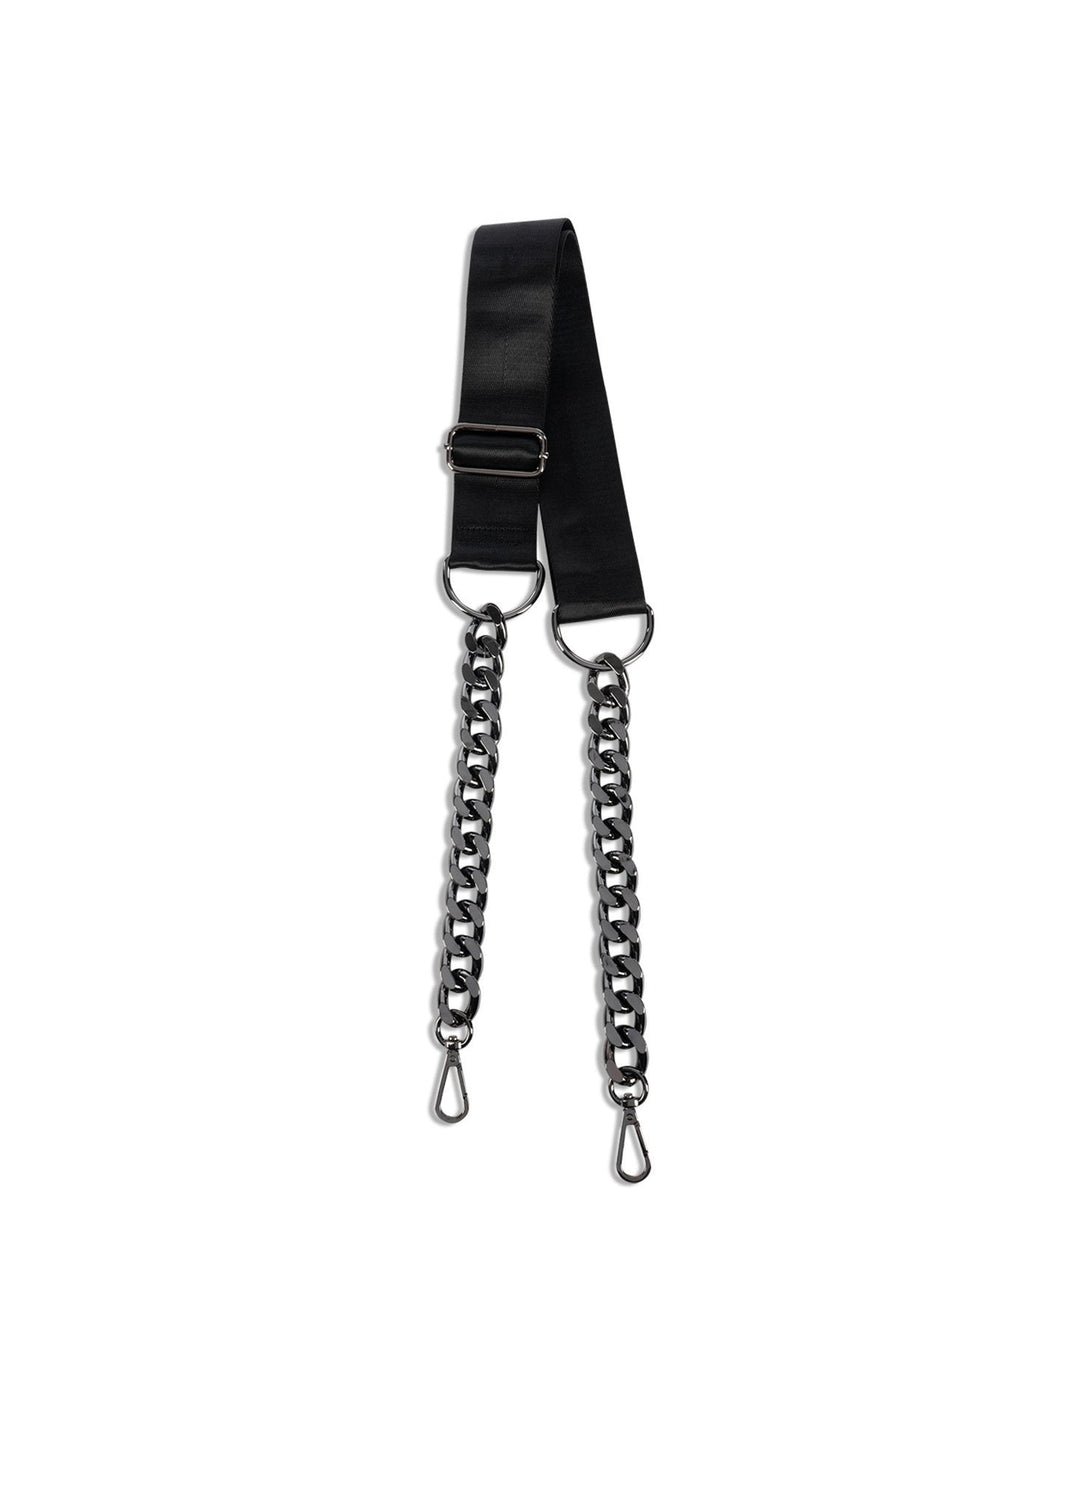 Straps - Chain  Bonnie Strap A 2 - Gunmetal Chain / Black (gunmetal